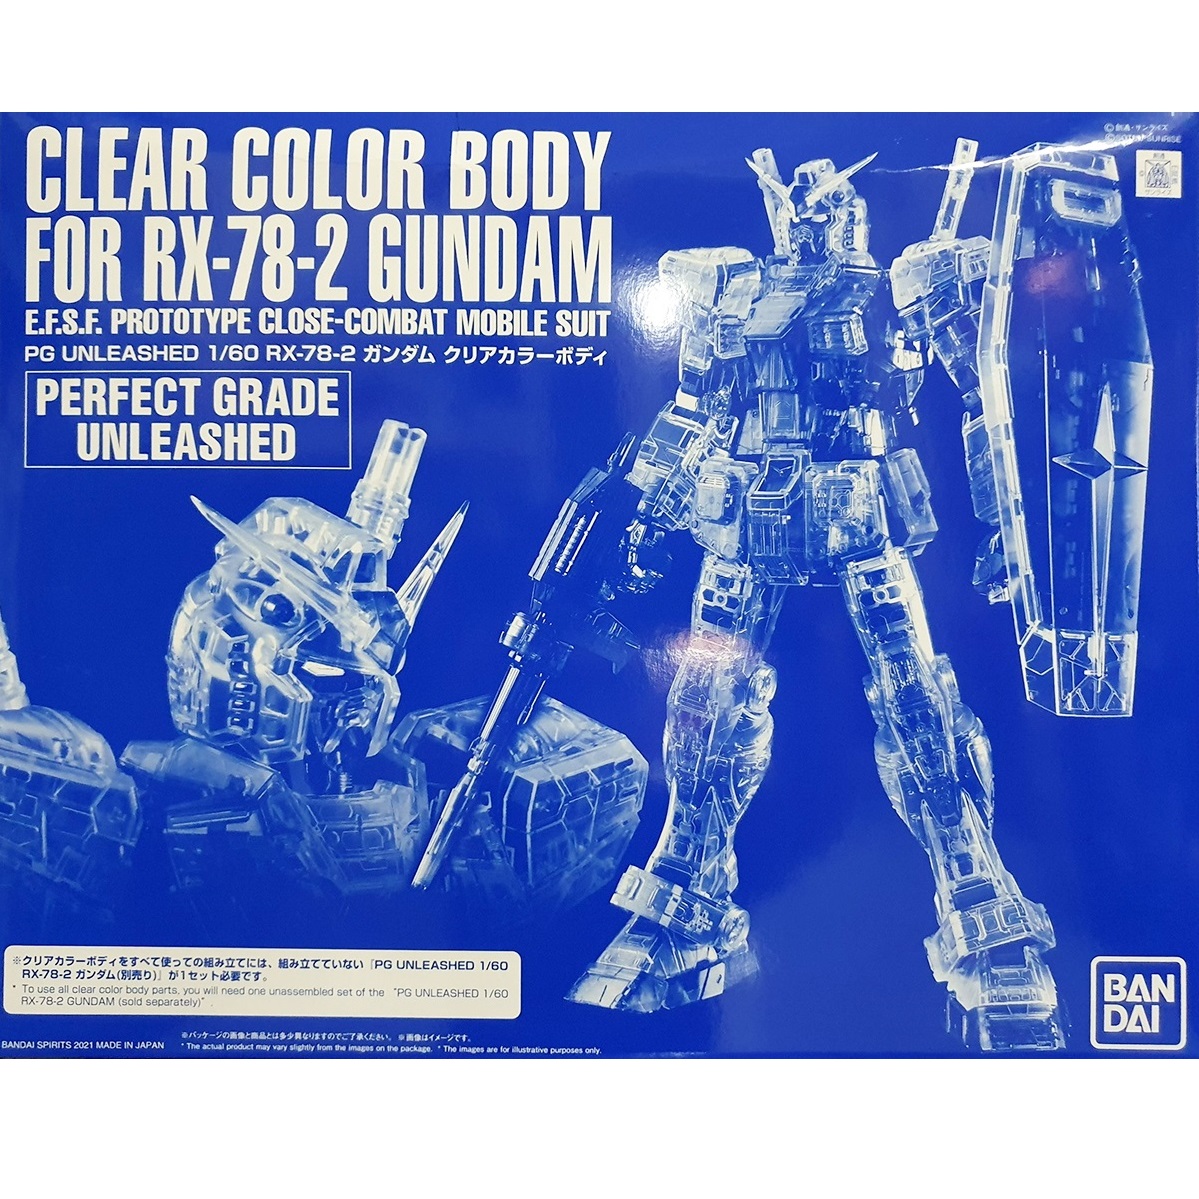 P-BANDAI PG UNLEASHED 1/60 RX-78-2 Gundam Clear Color Body Plastic Model Kit